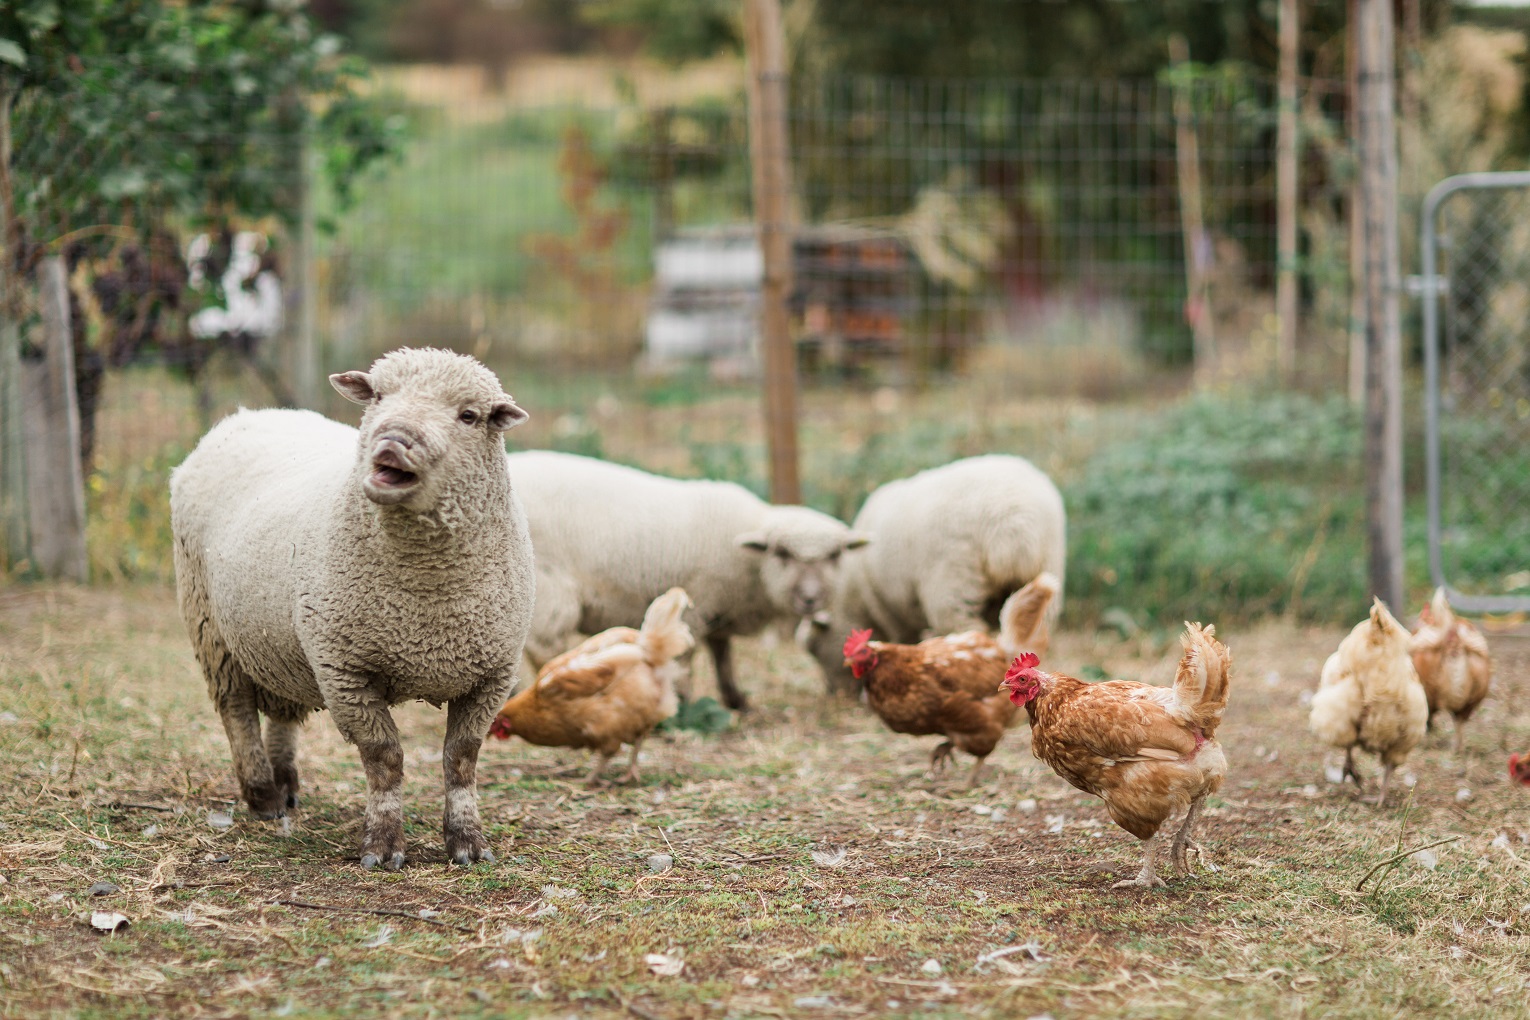 sheep and chickens in vineyard organic wine